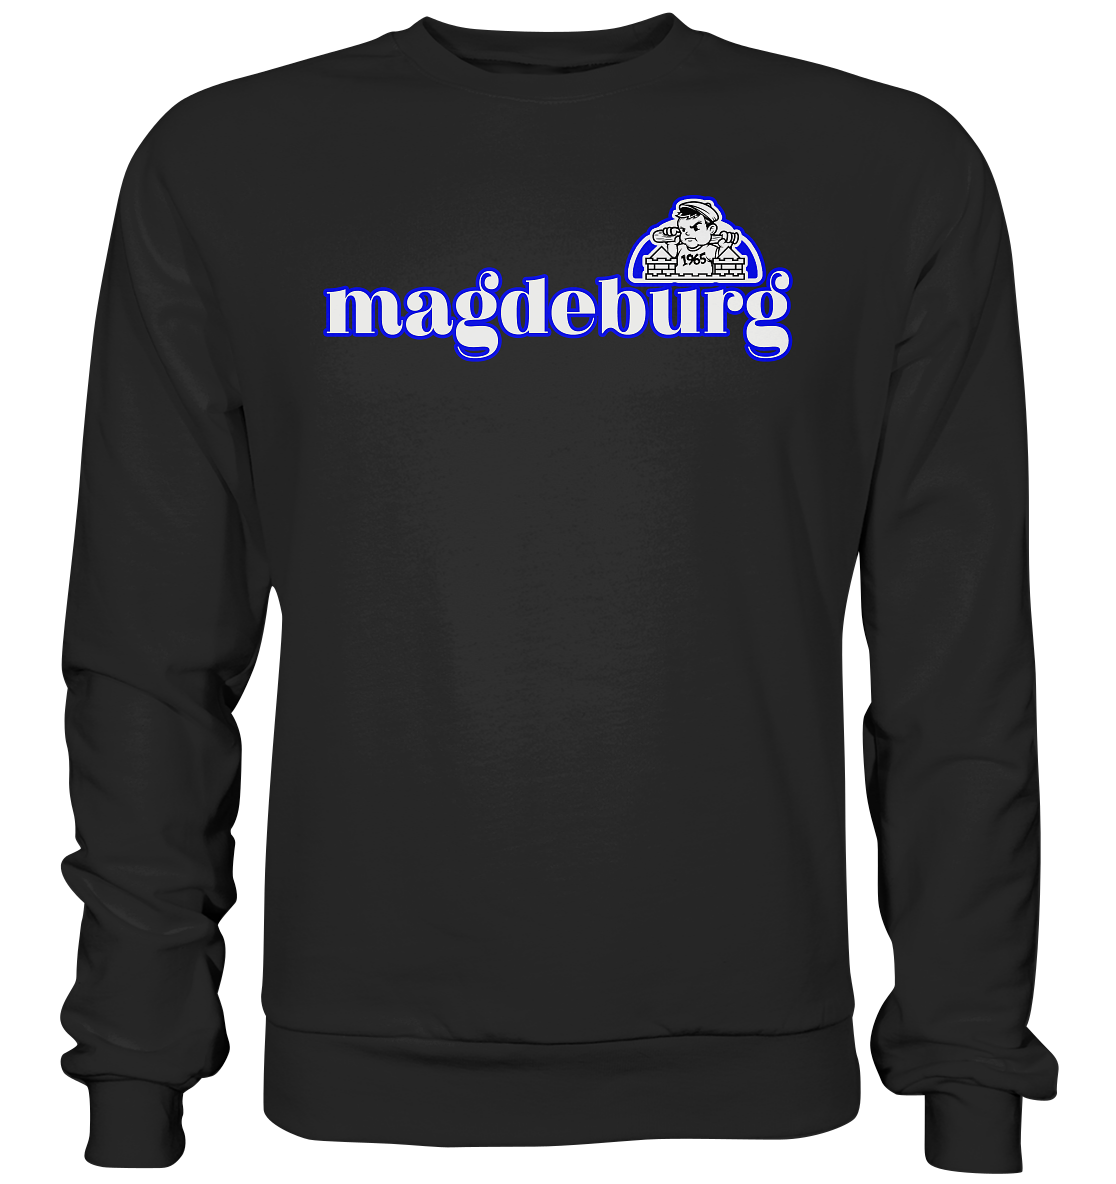 Magdeburger - Sweatshirt